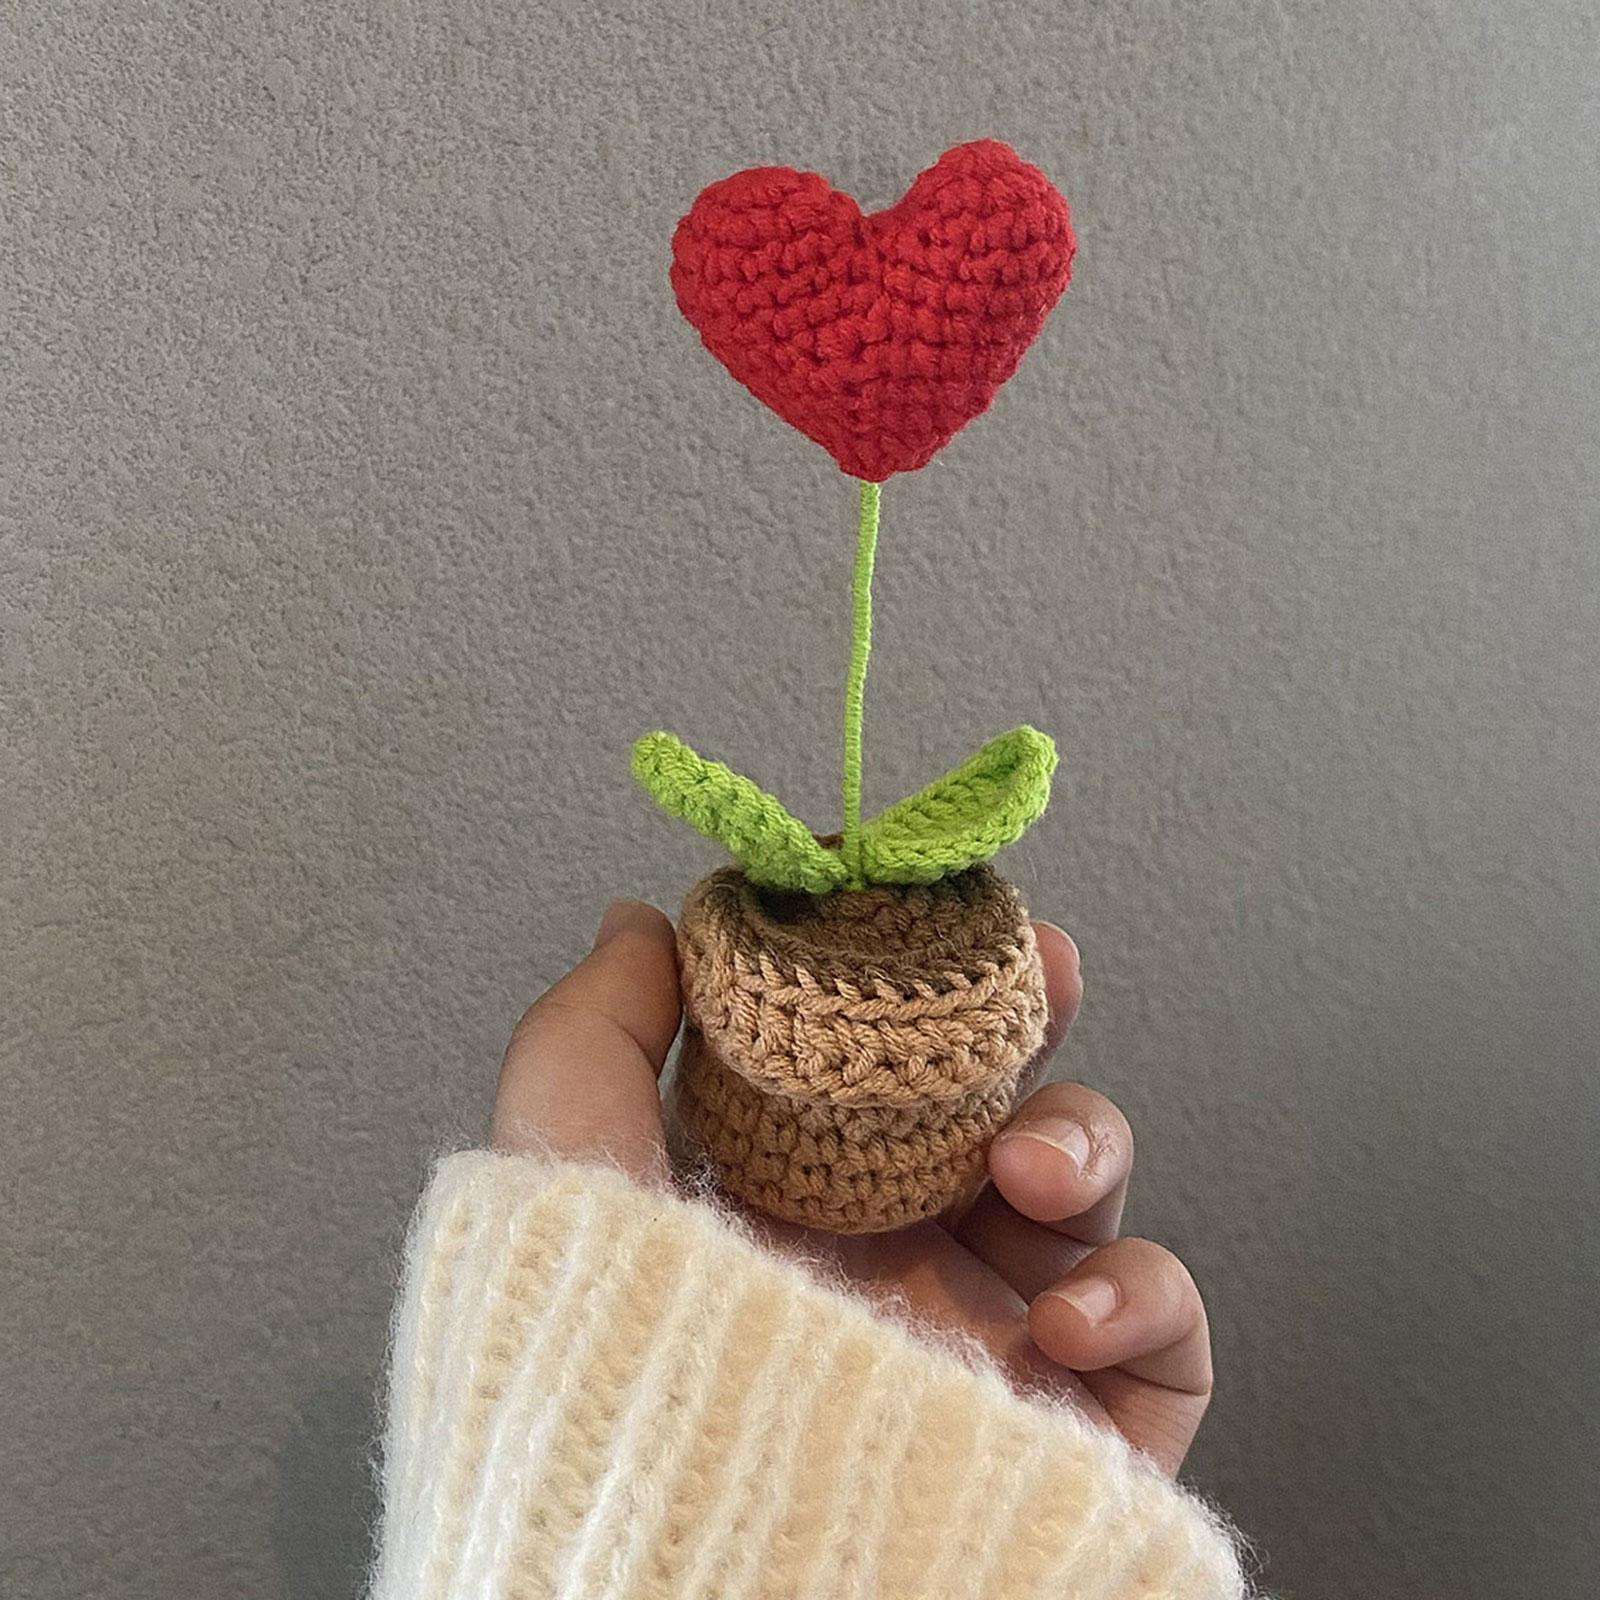 Handmade DIY Beginner Crochet Kit for Adults and Kids Includes Yarn, Hook Heart